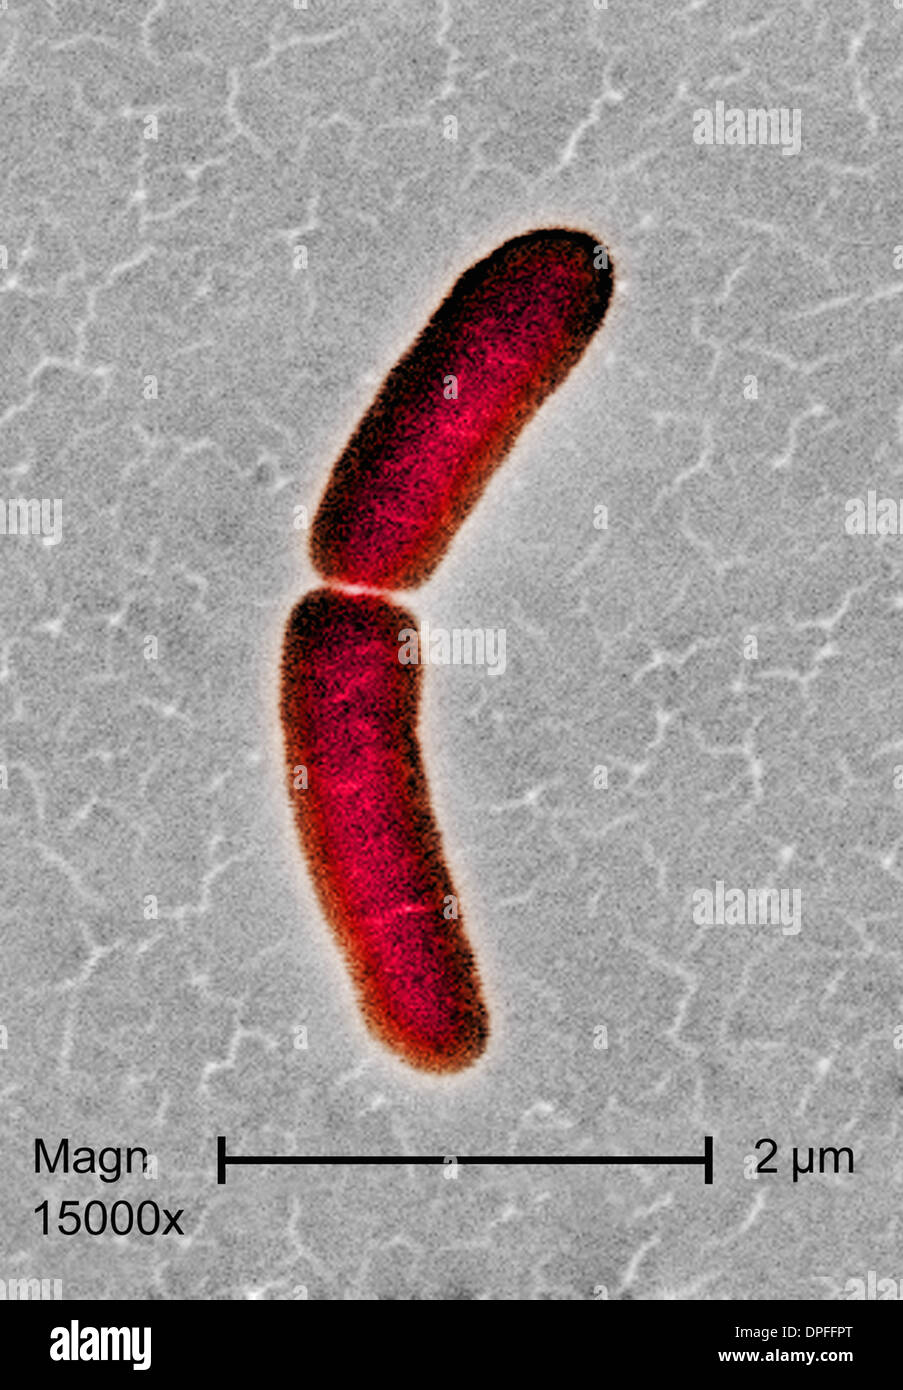 SEM von Salmonella Typhimurium Bakterium Stockfoto